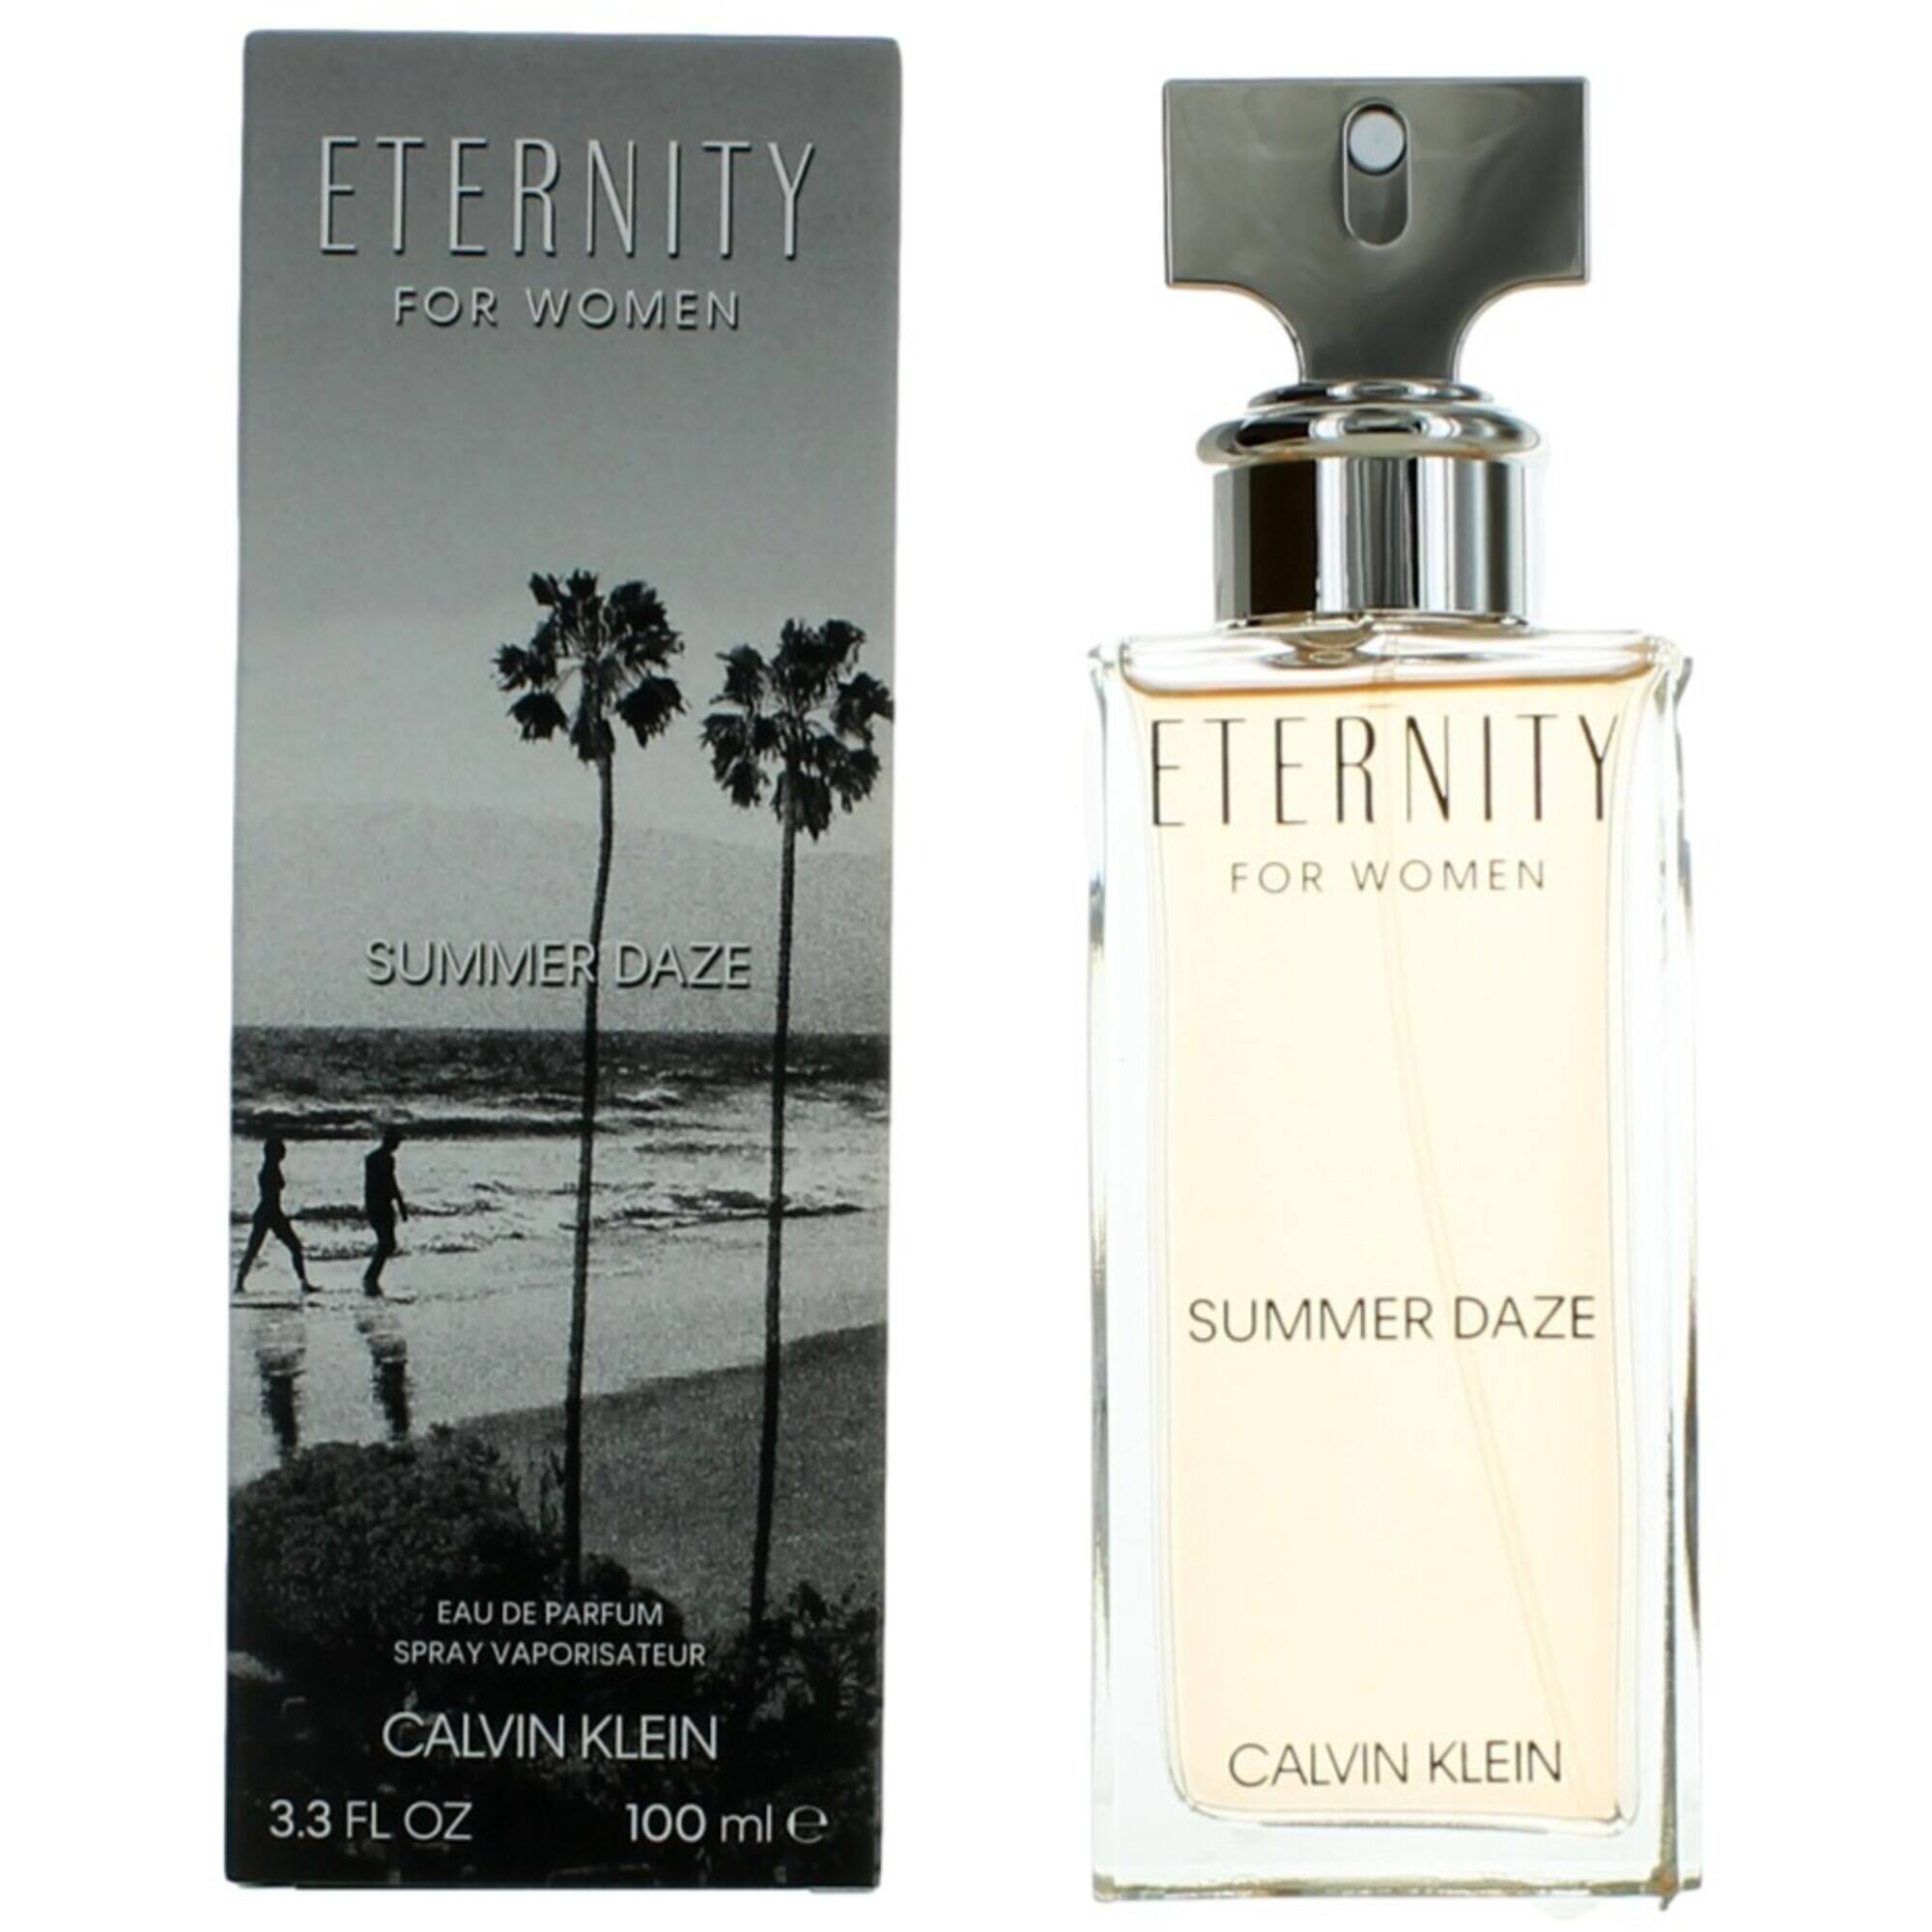 Calvin Klein Women's Eau De Parfum Spray - Eternity Summer Daze Captivating, 3.3oz